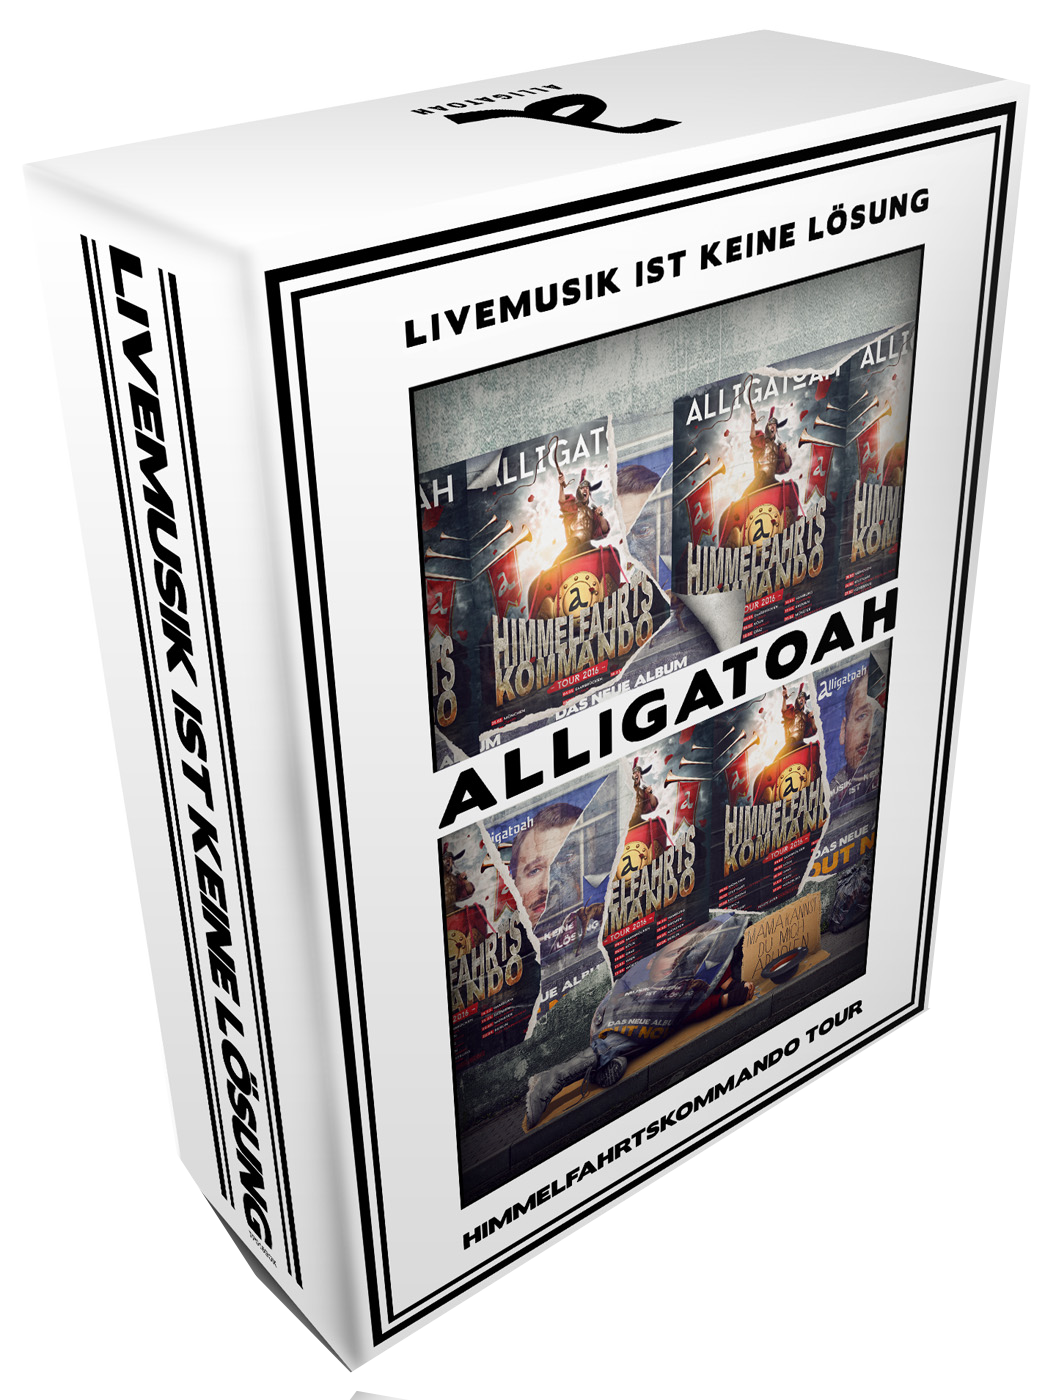 Alligatoah Tour - Fanbox) + DVD (Ltd. (3CD+DVD+T-Shirt) Livemusik Ist Keine - Video) Himmelfahrtskommando Lösung - Alligatoah - (CD